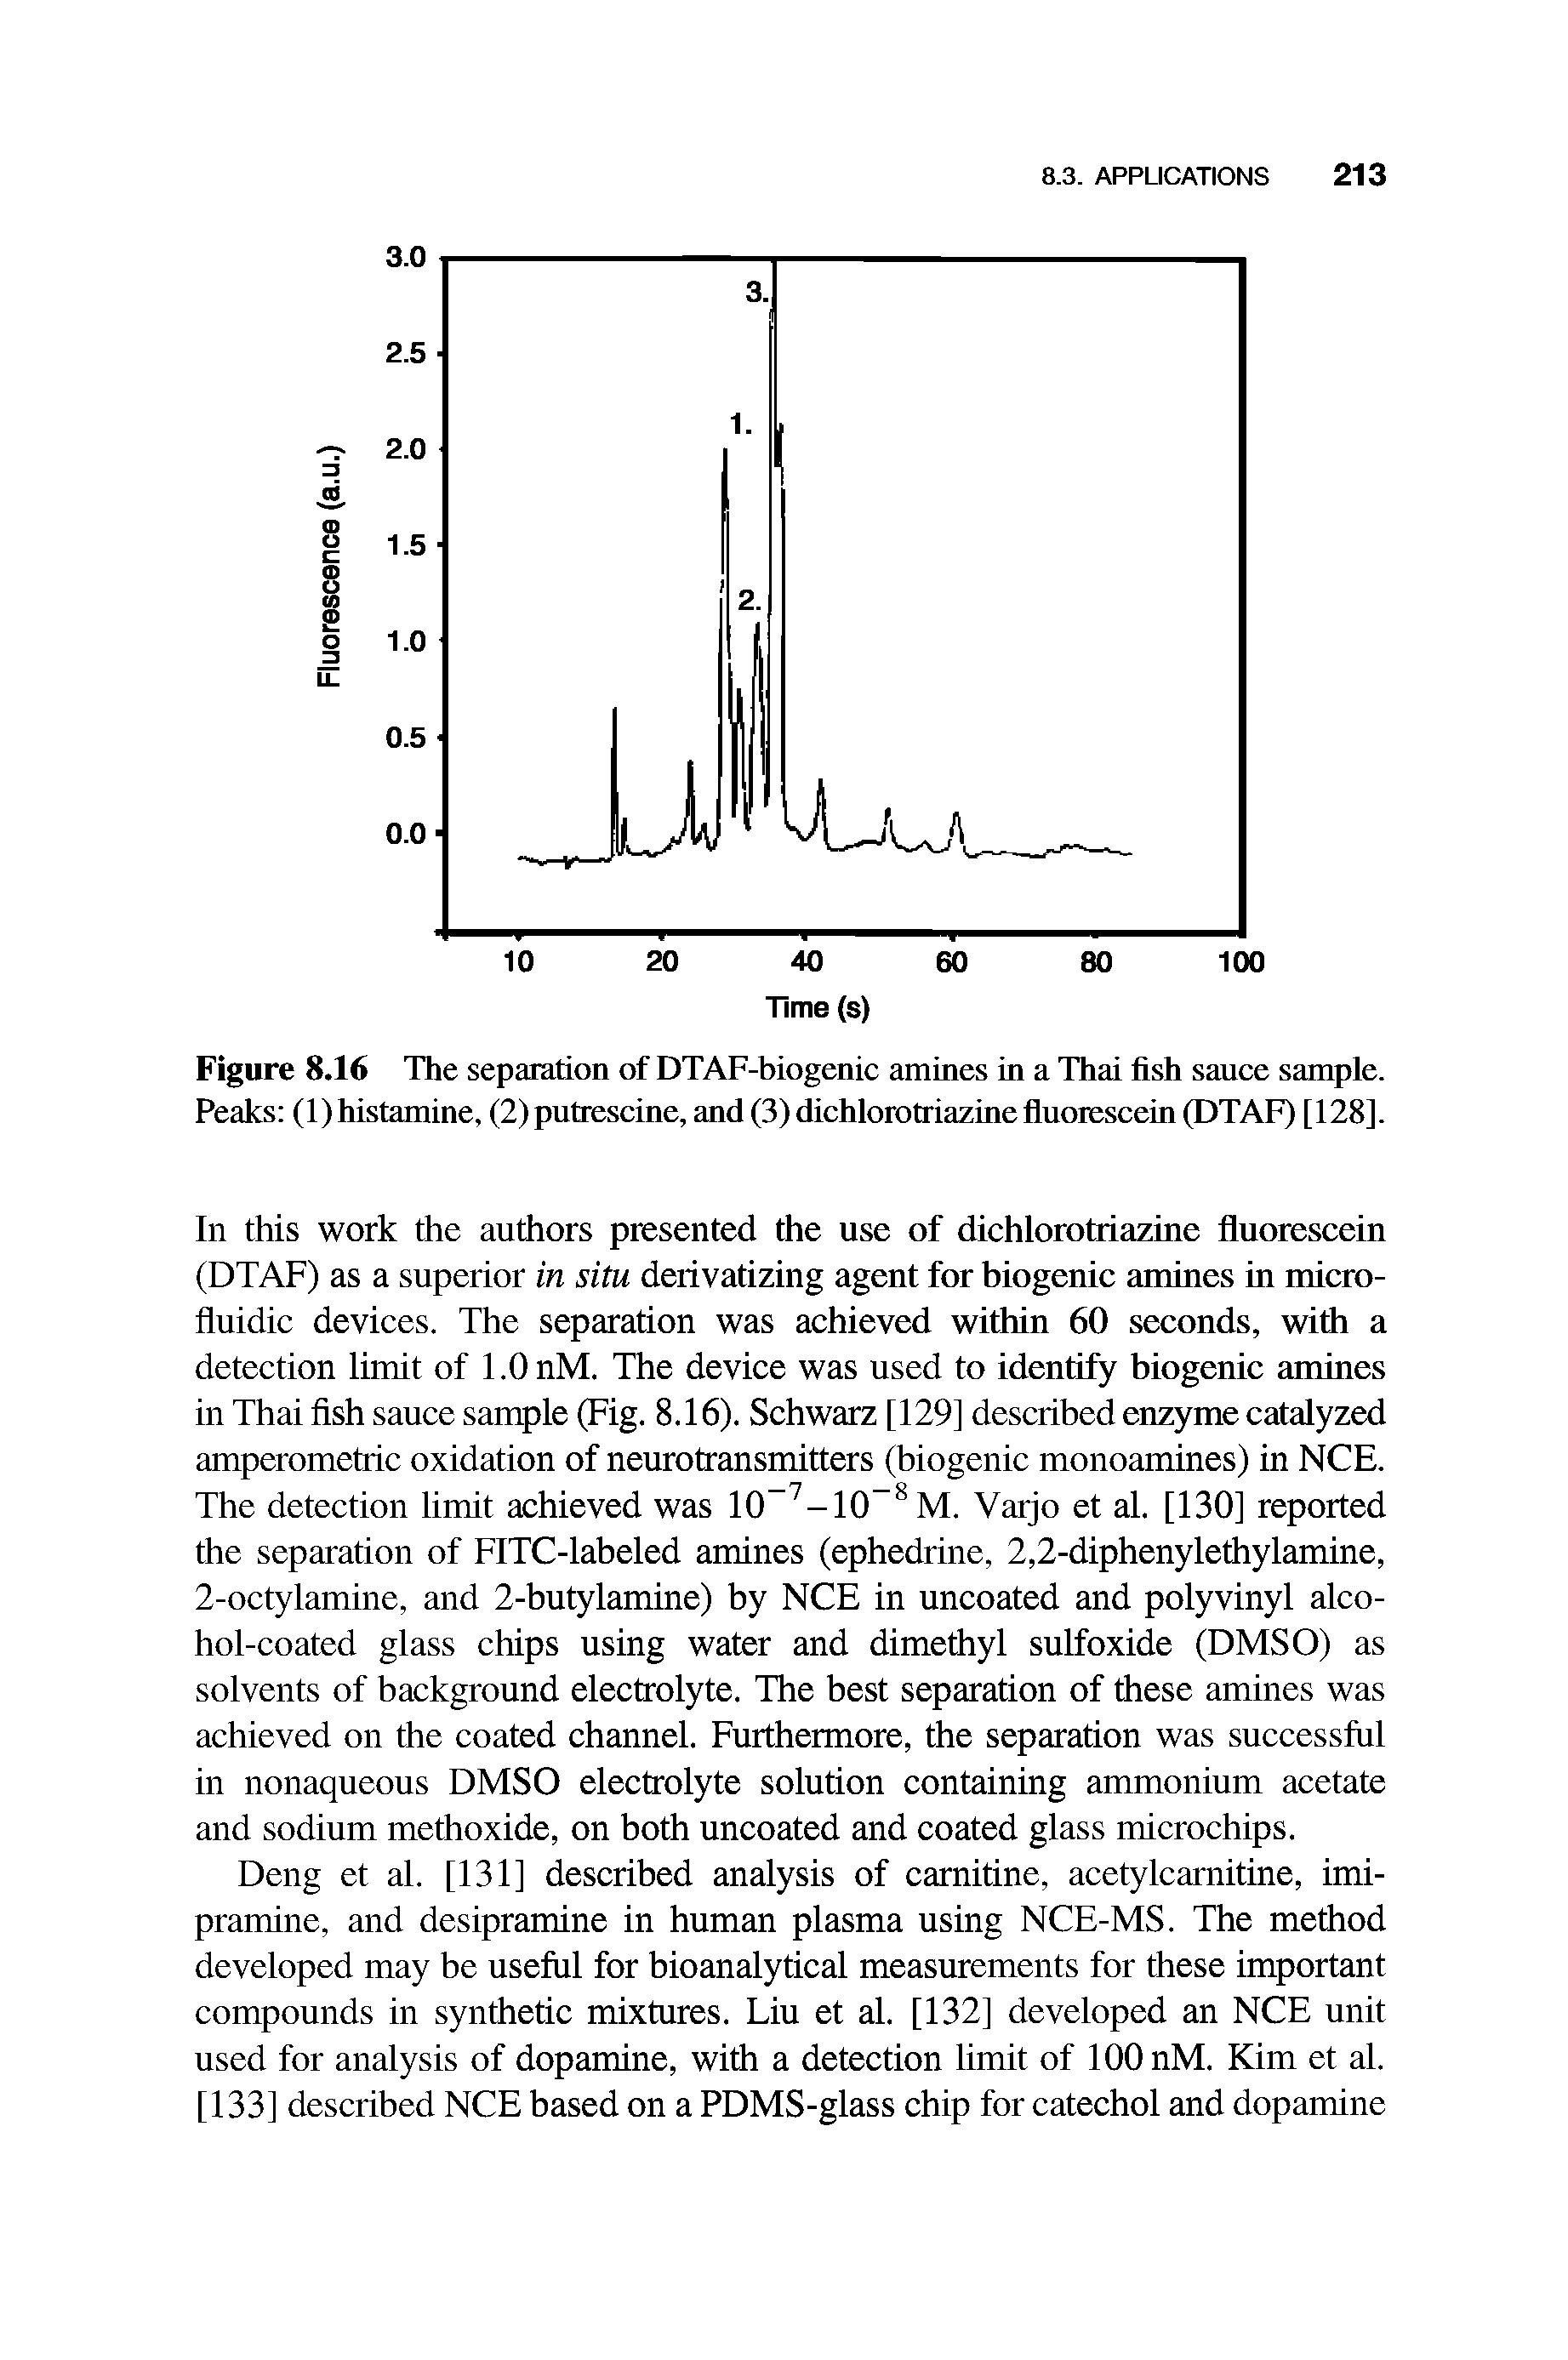 Figure 8.16 The separation of DTAF-biogenic amines in a Thai fish sauce sample. Peaks (1)histamine, (2)putrescine, and (3) dichlorotriazinefluorescein (DTAF) [128].